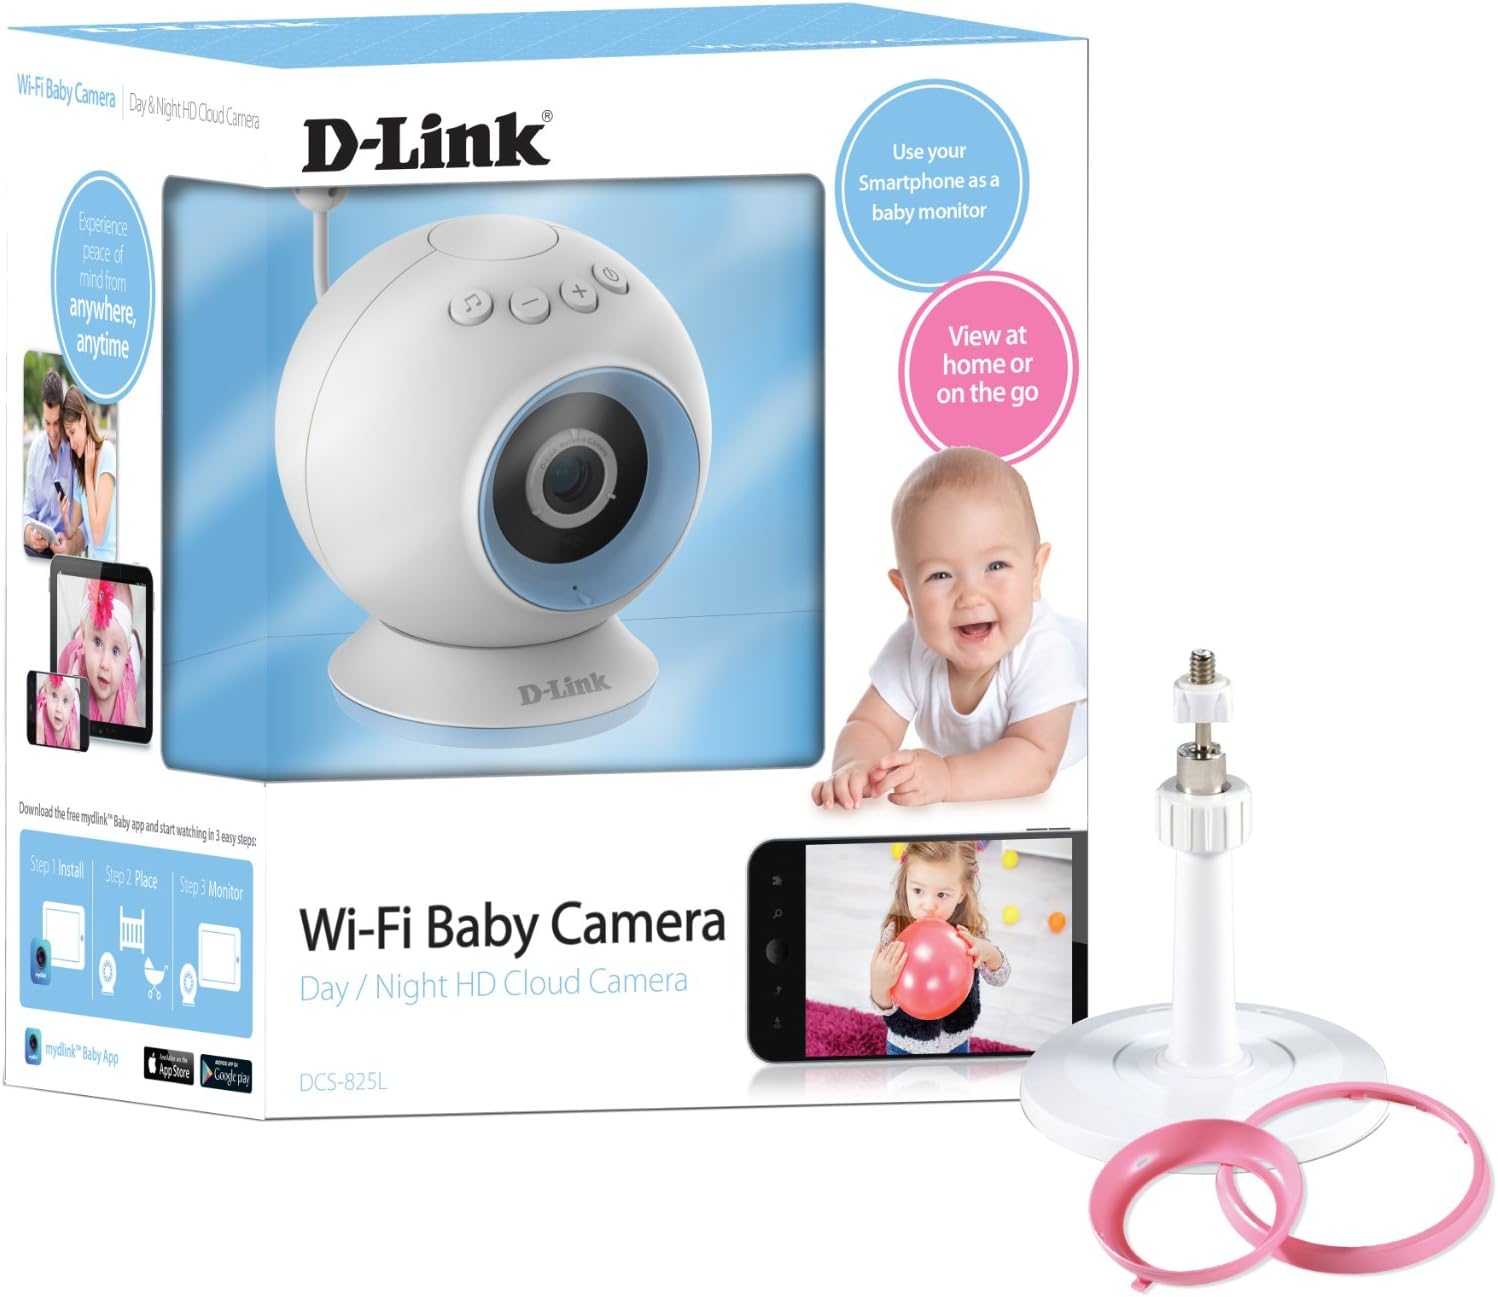 D-Link DCS-825L 720p HD Day/Night WiFi BabyCam w/Temperature Sensor, 2-way Audio